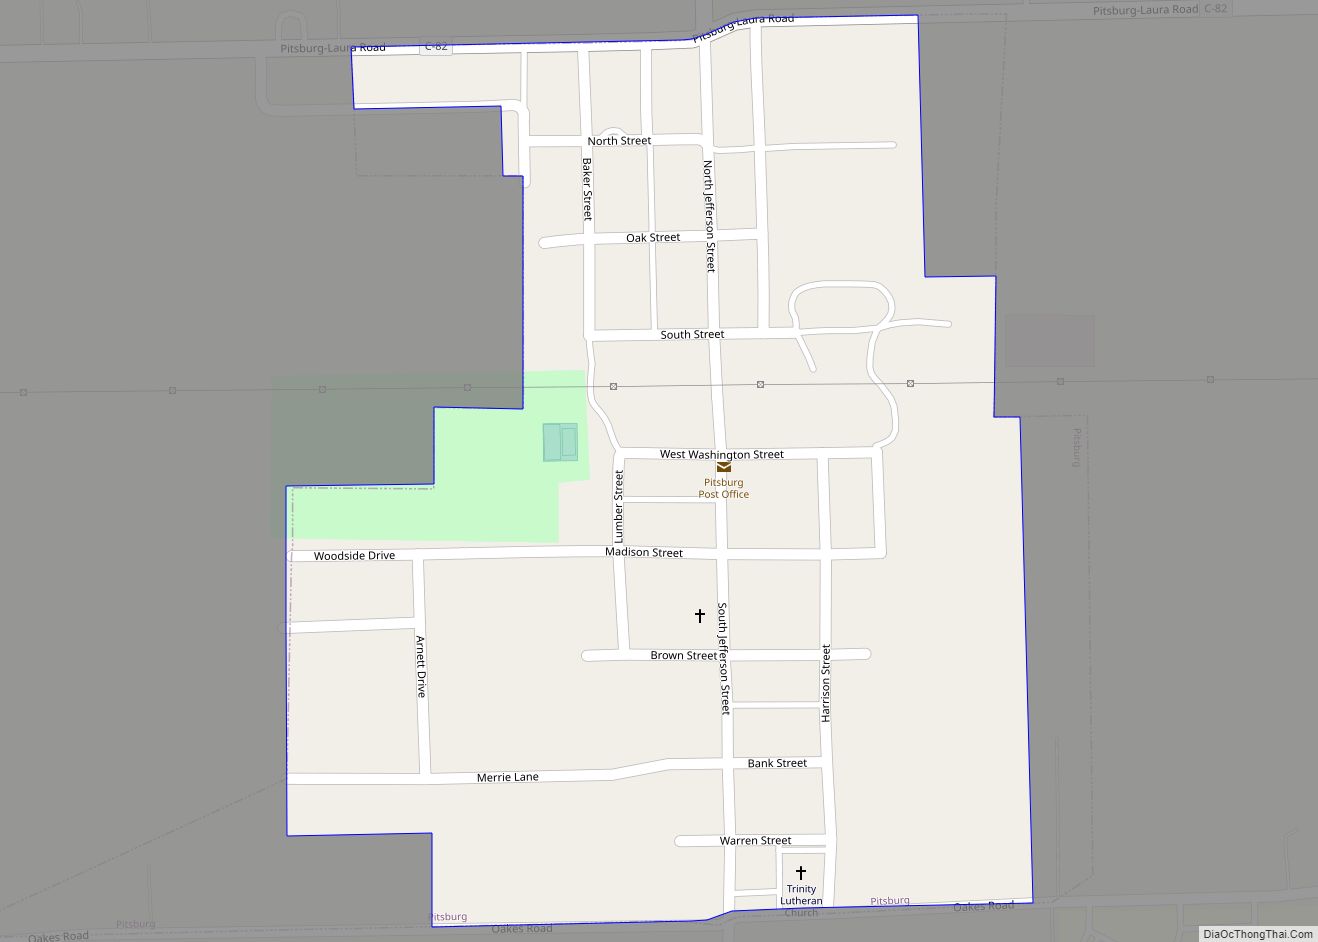 Map of Pitsburg village